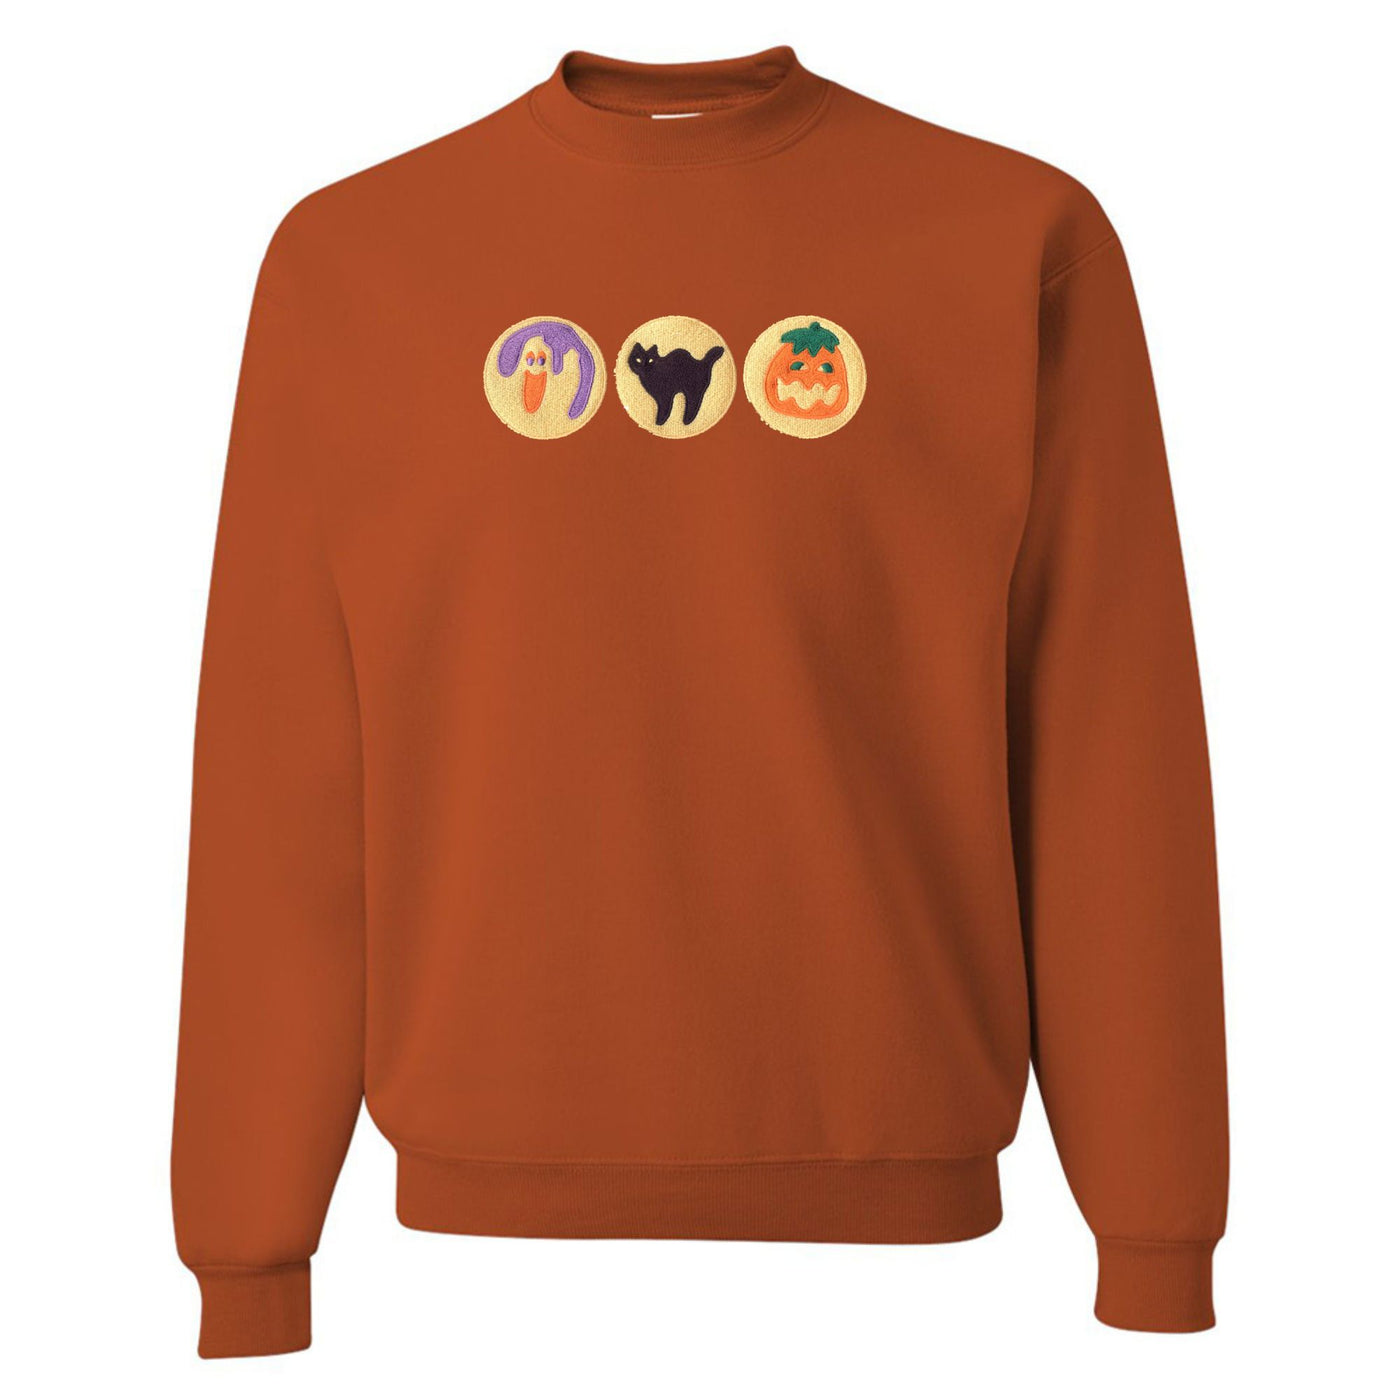 'Halloween Cookies' Embroidered Crewneck Sweatshirt